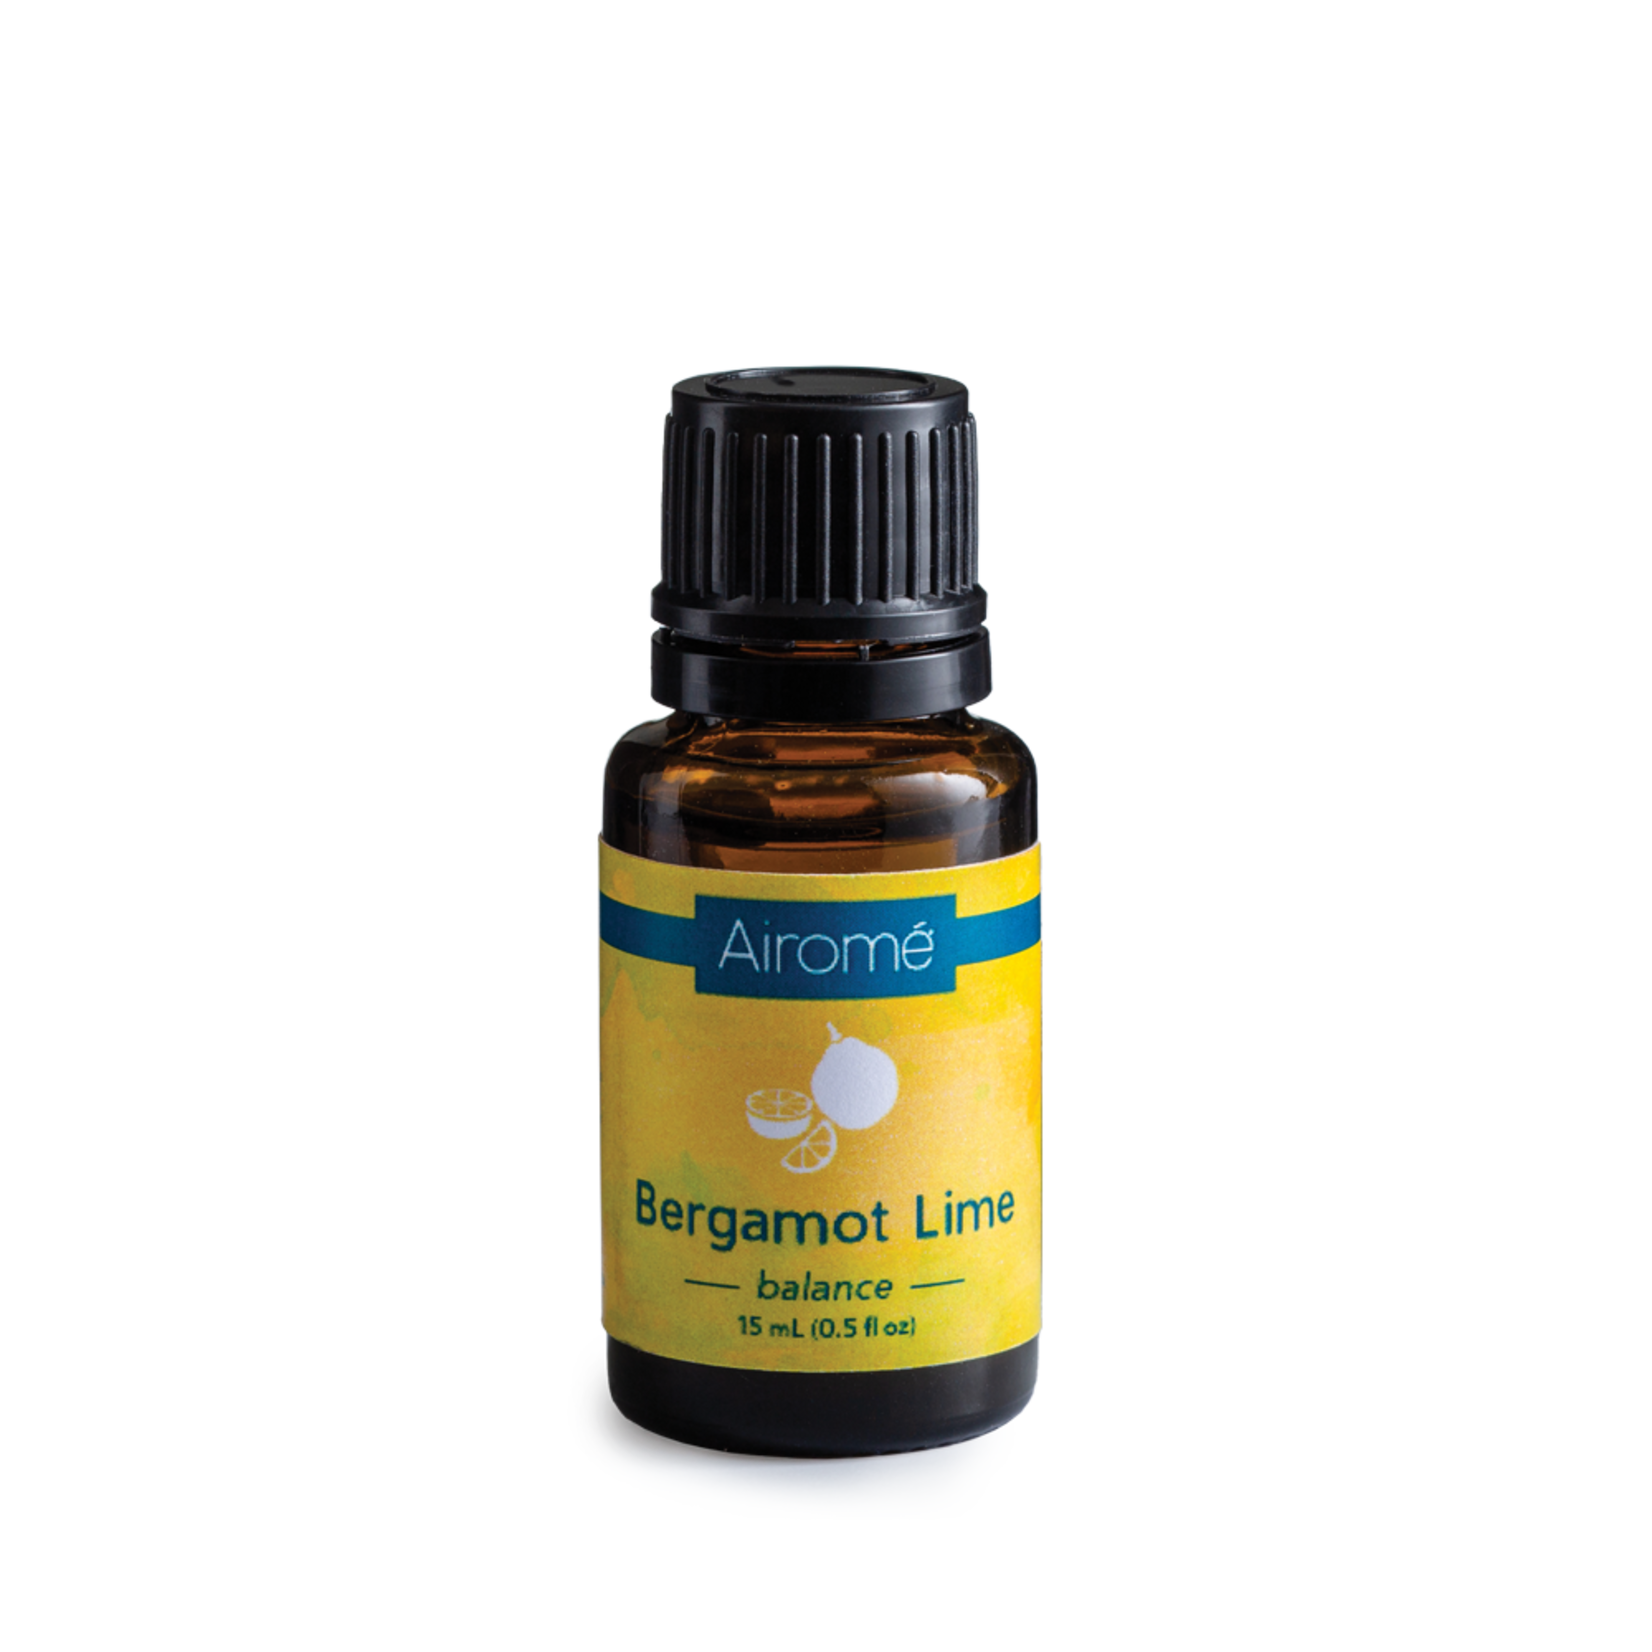 Airome Bergmot Lime Essential OIl 15ml